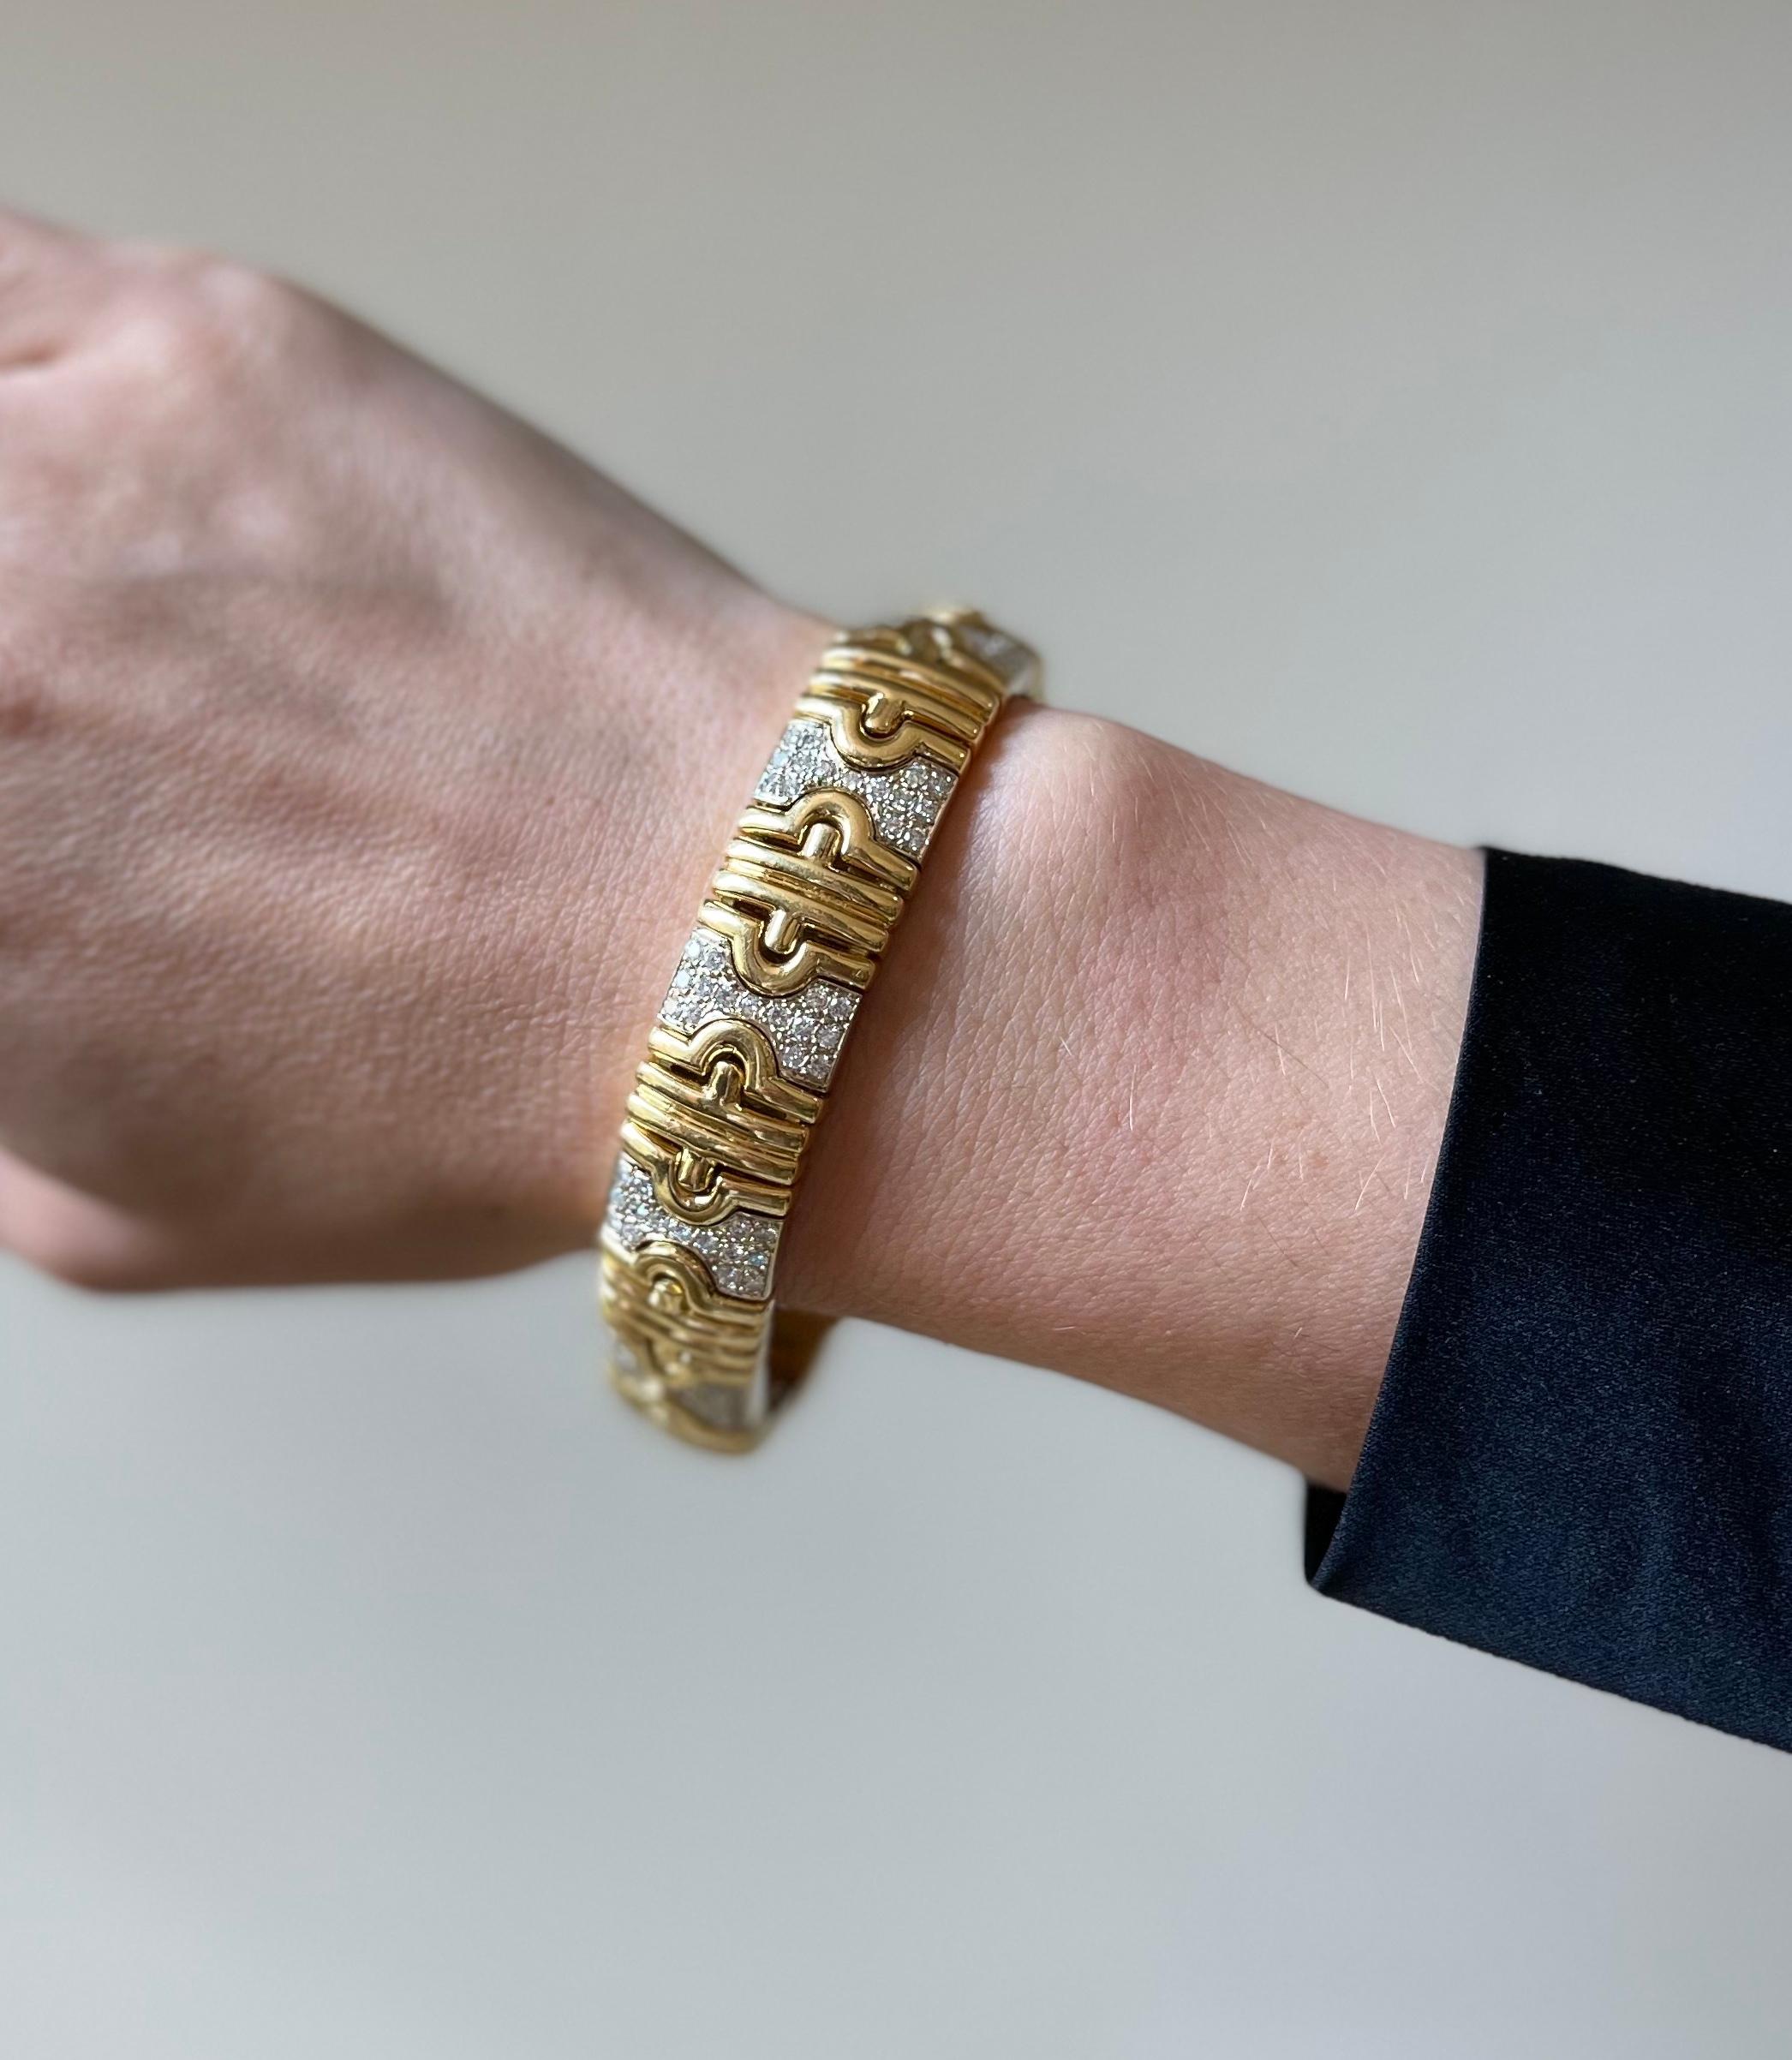 18k gold Parentesi style bracelet, set with approx. 3.00ctw in diamonds. Bracelet will fit approx. 7